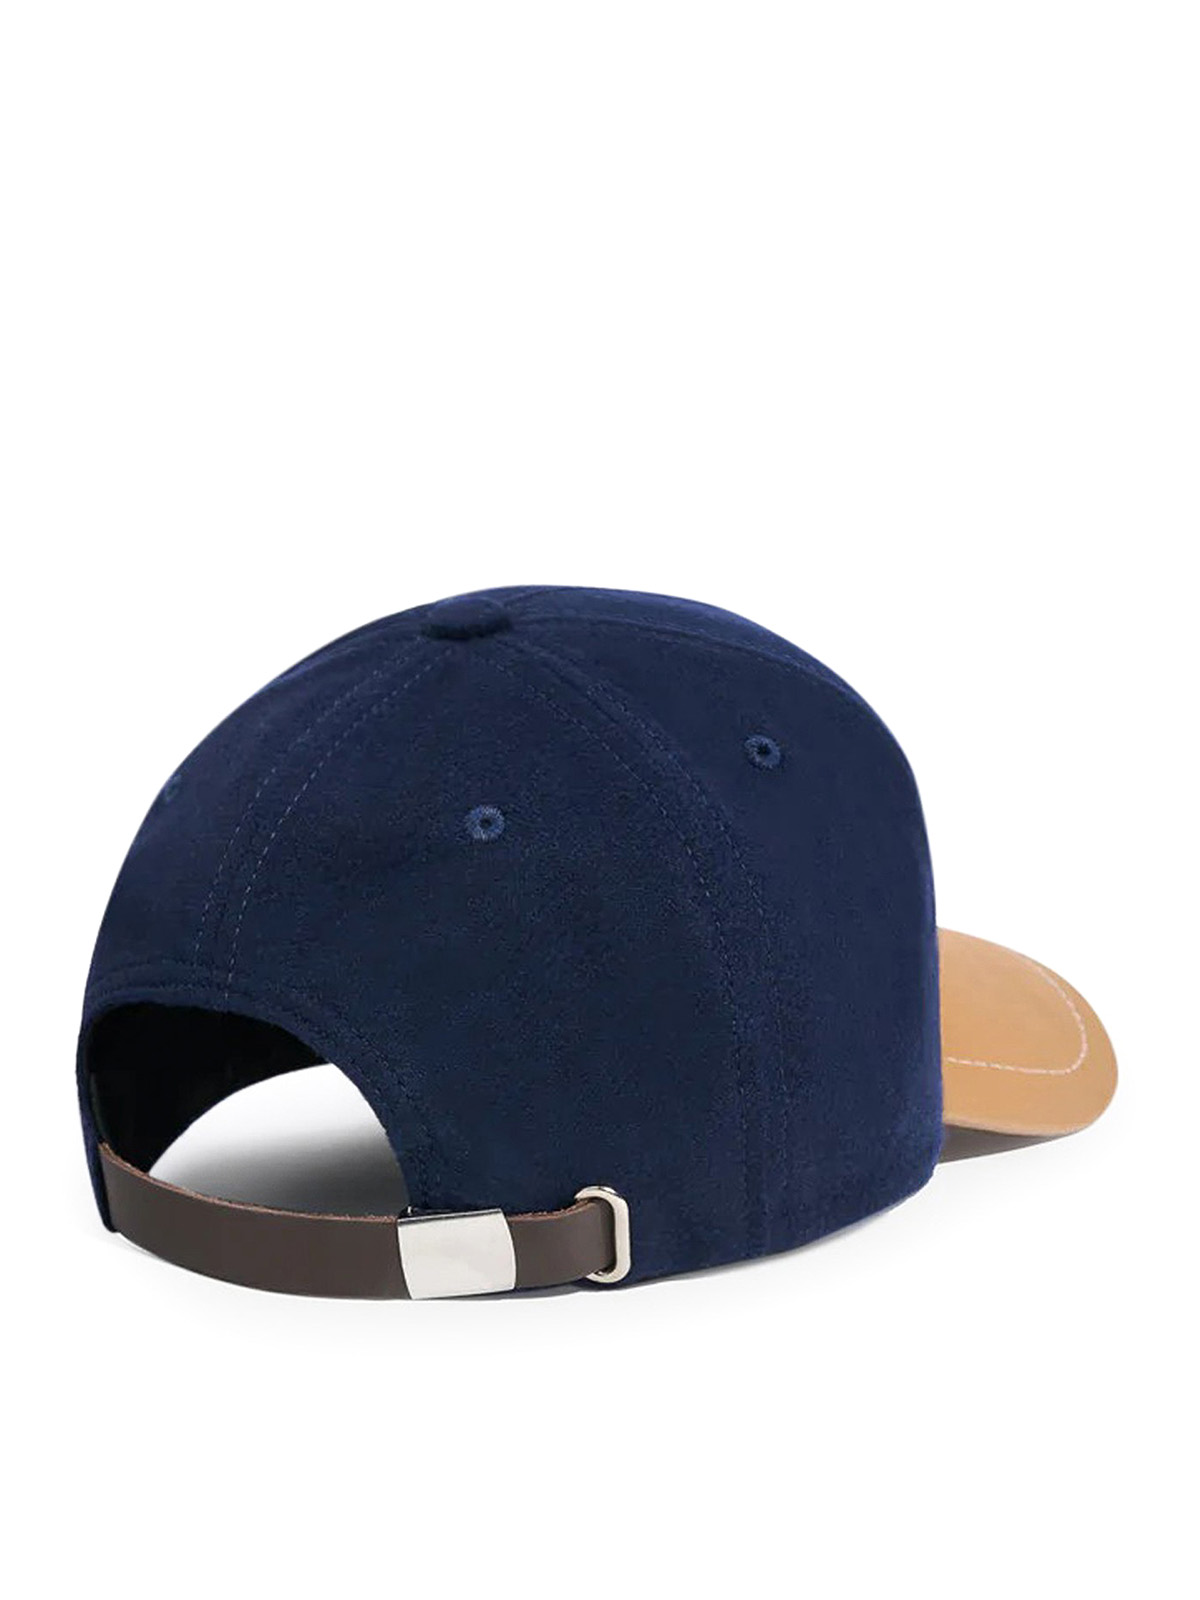 Jil SANDER+ Wool Baseball Cap Men's Navy Blue | Vitkac